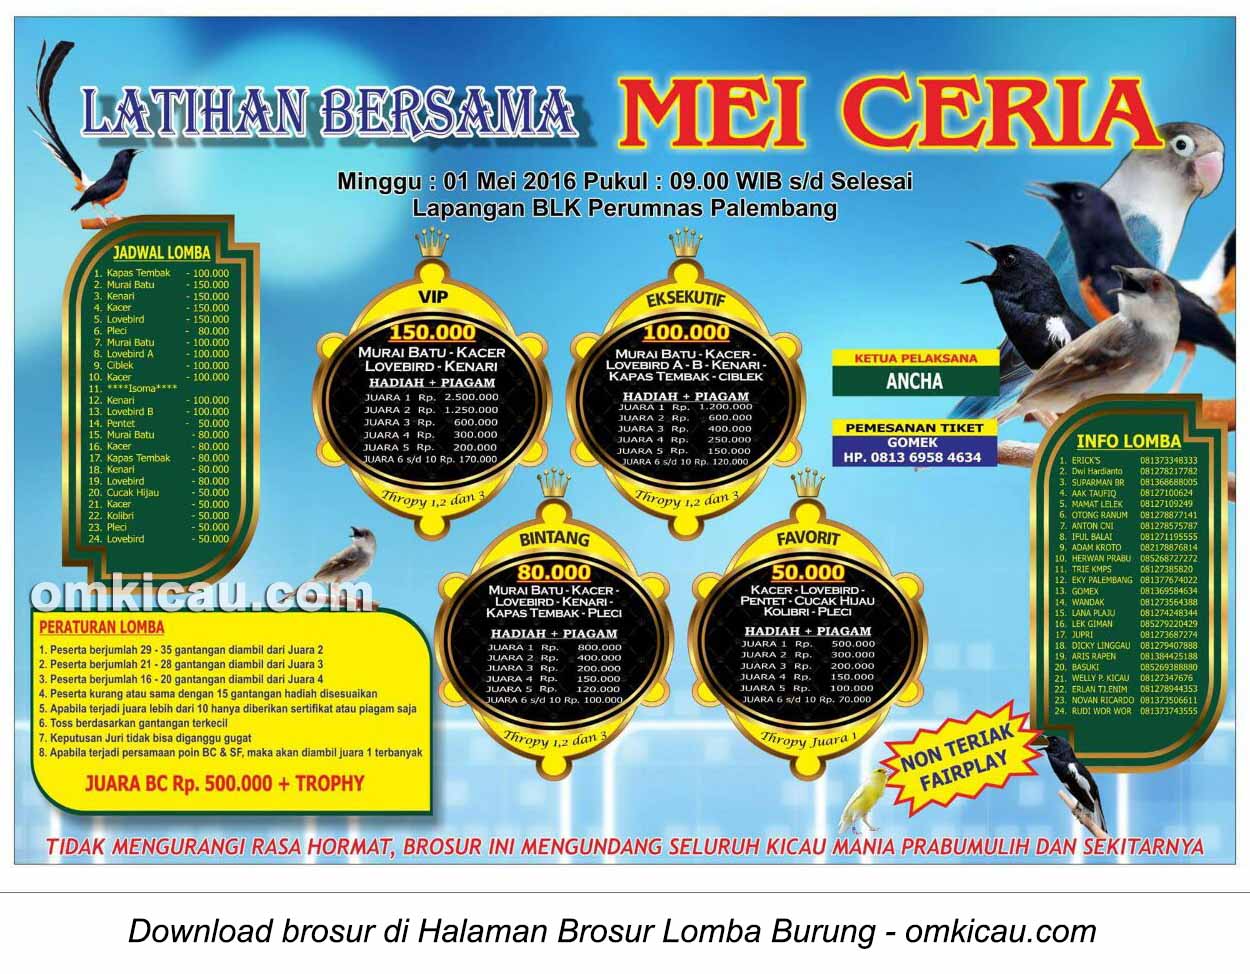 Brosur Latihan Bersama Mei Ceria, Palembang, 1 Mei 2016